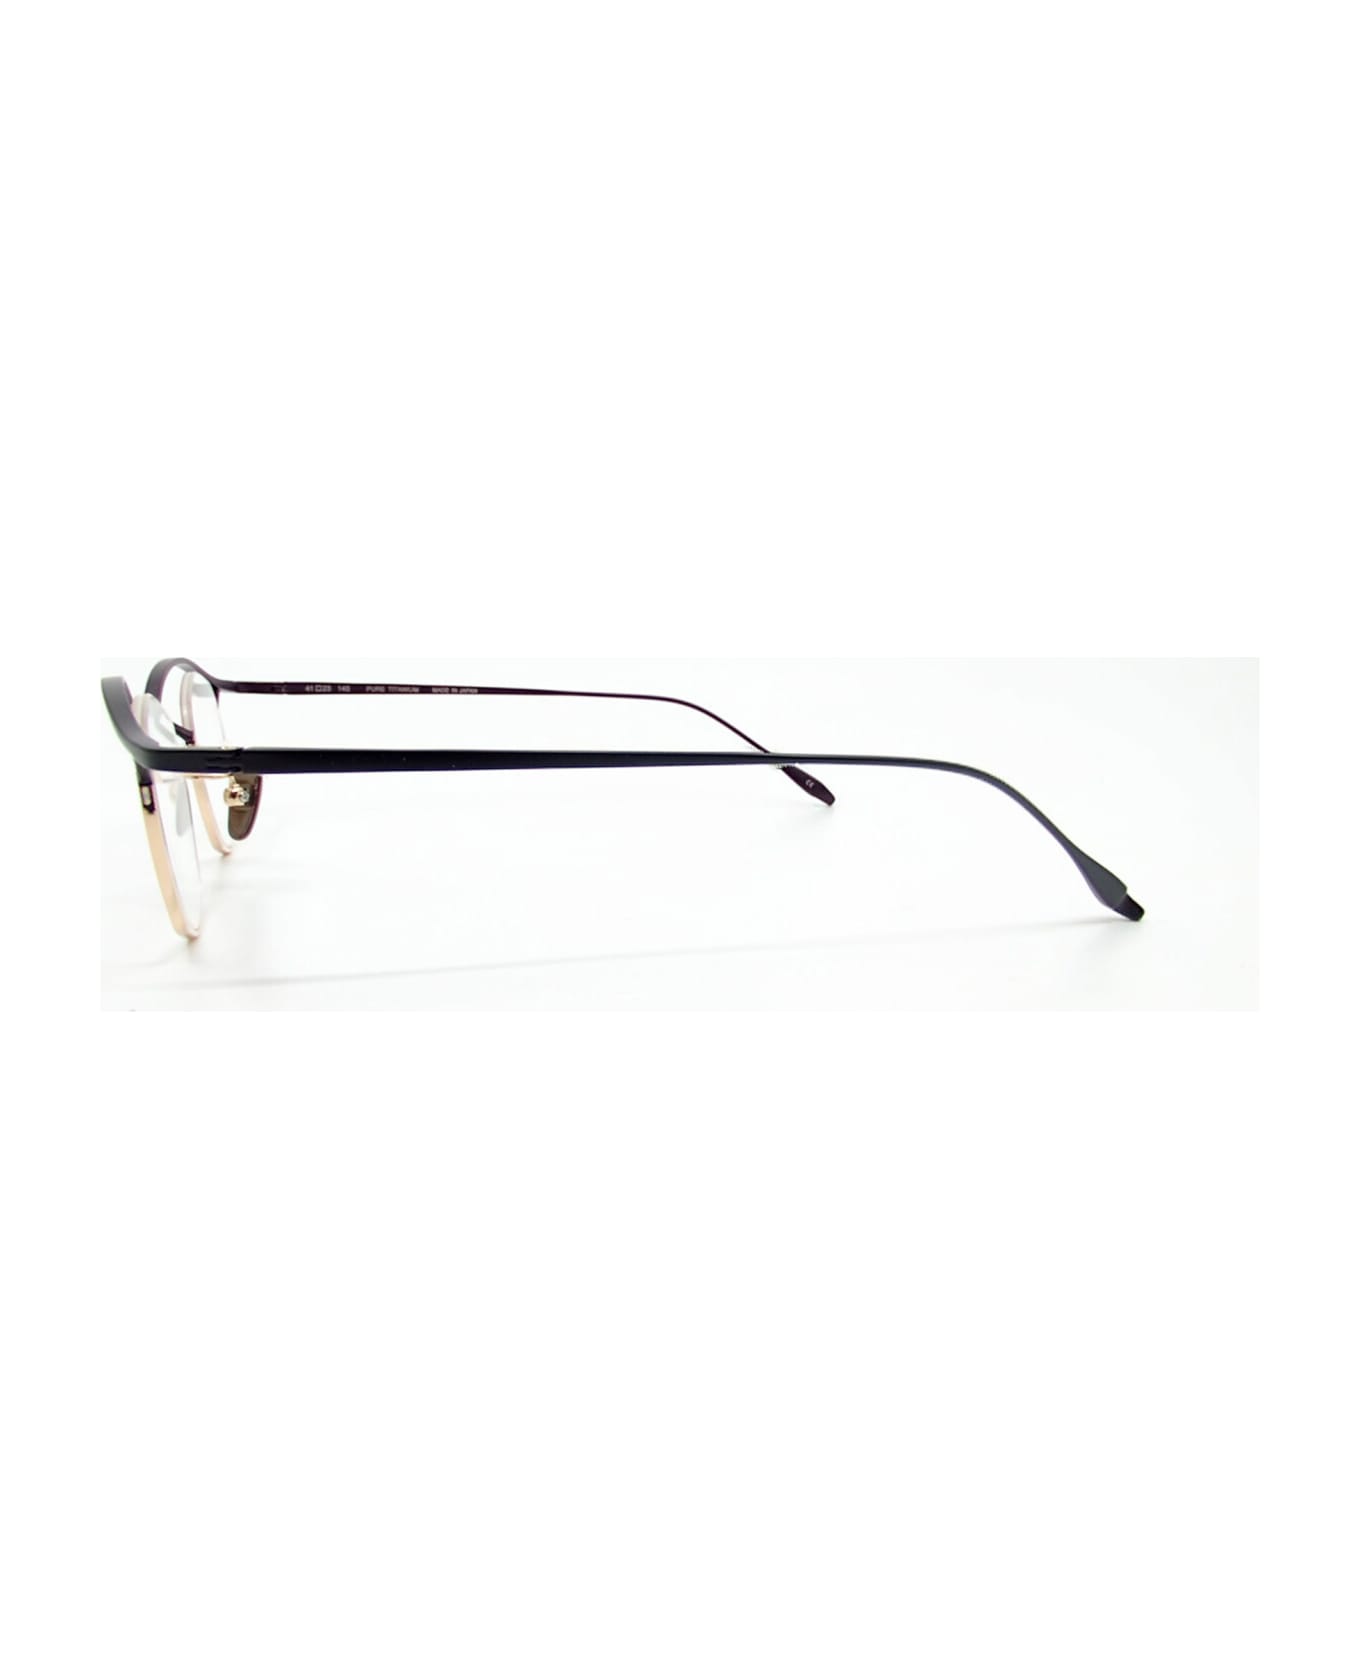 FACTORY900 Titanos X Factory900 Mf-002 - Black / Gold Rx Glasses - gold/black